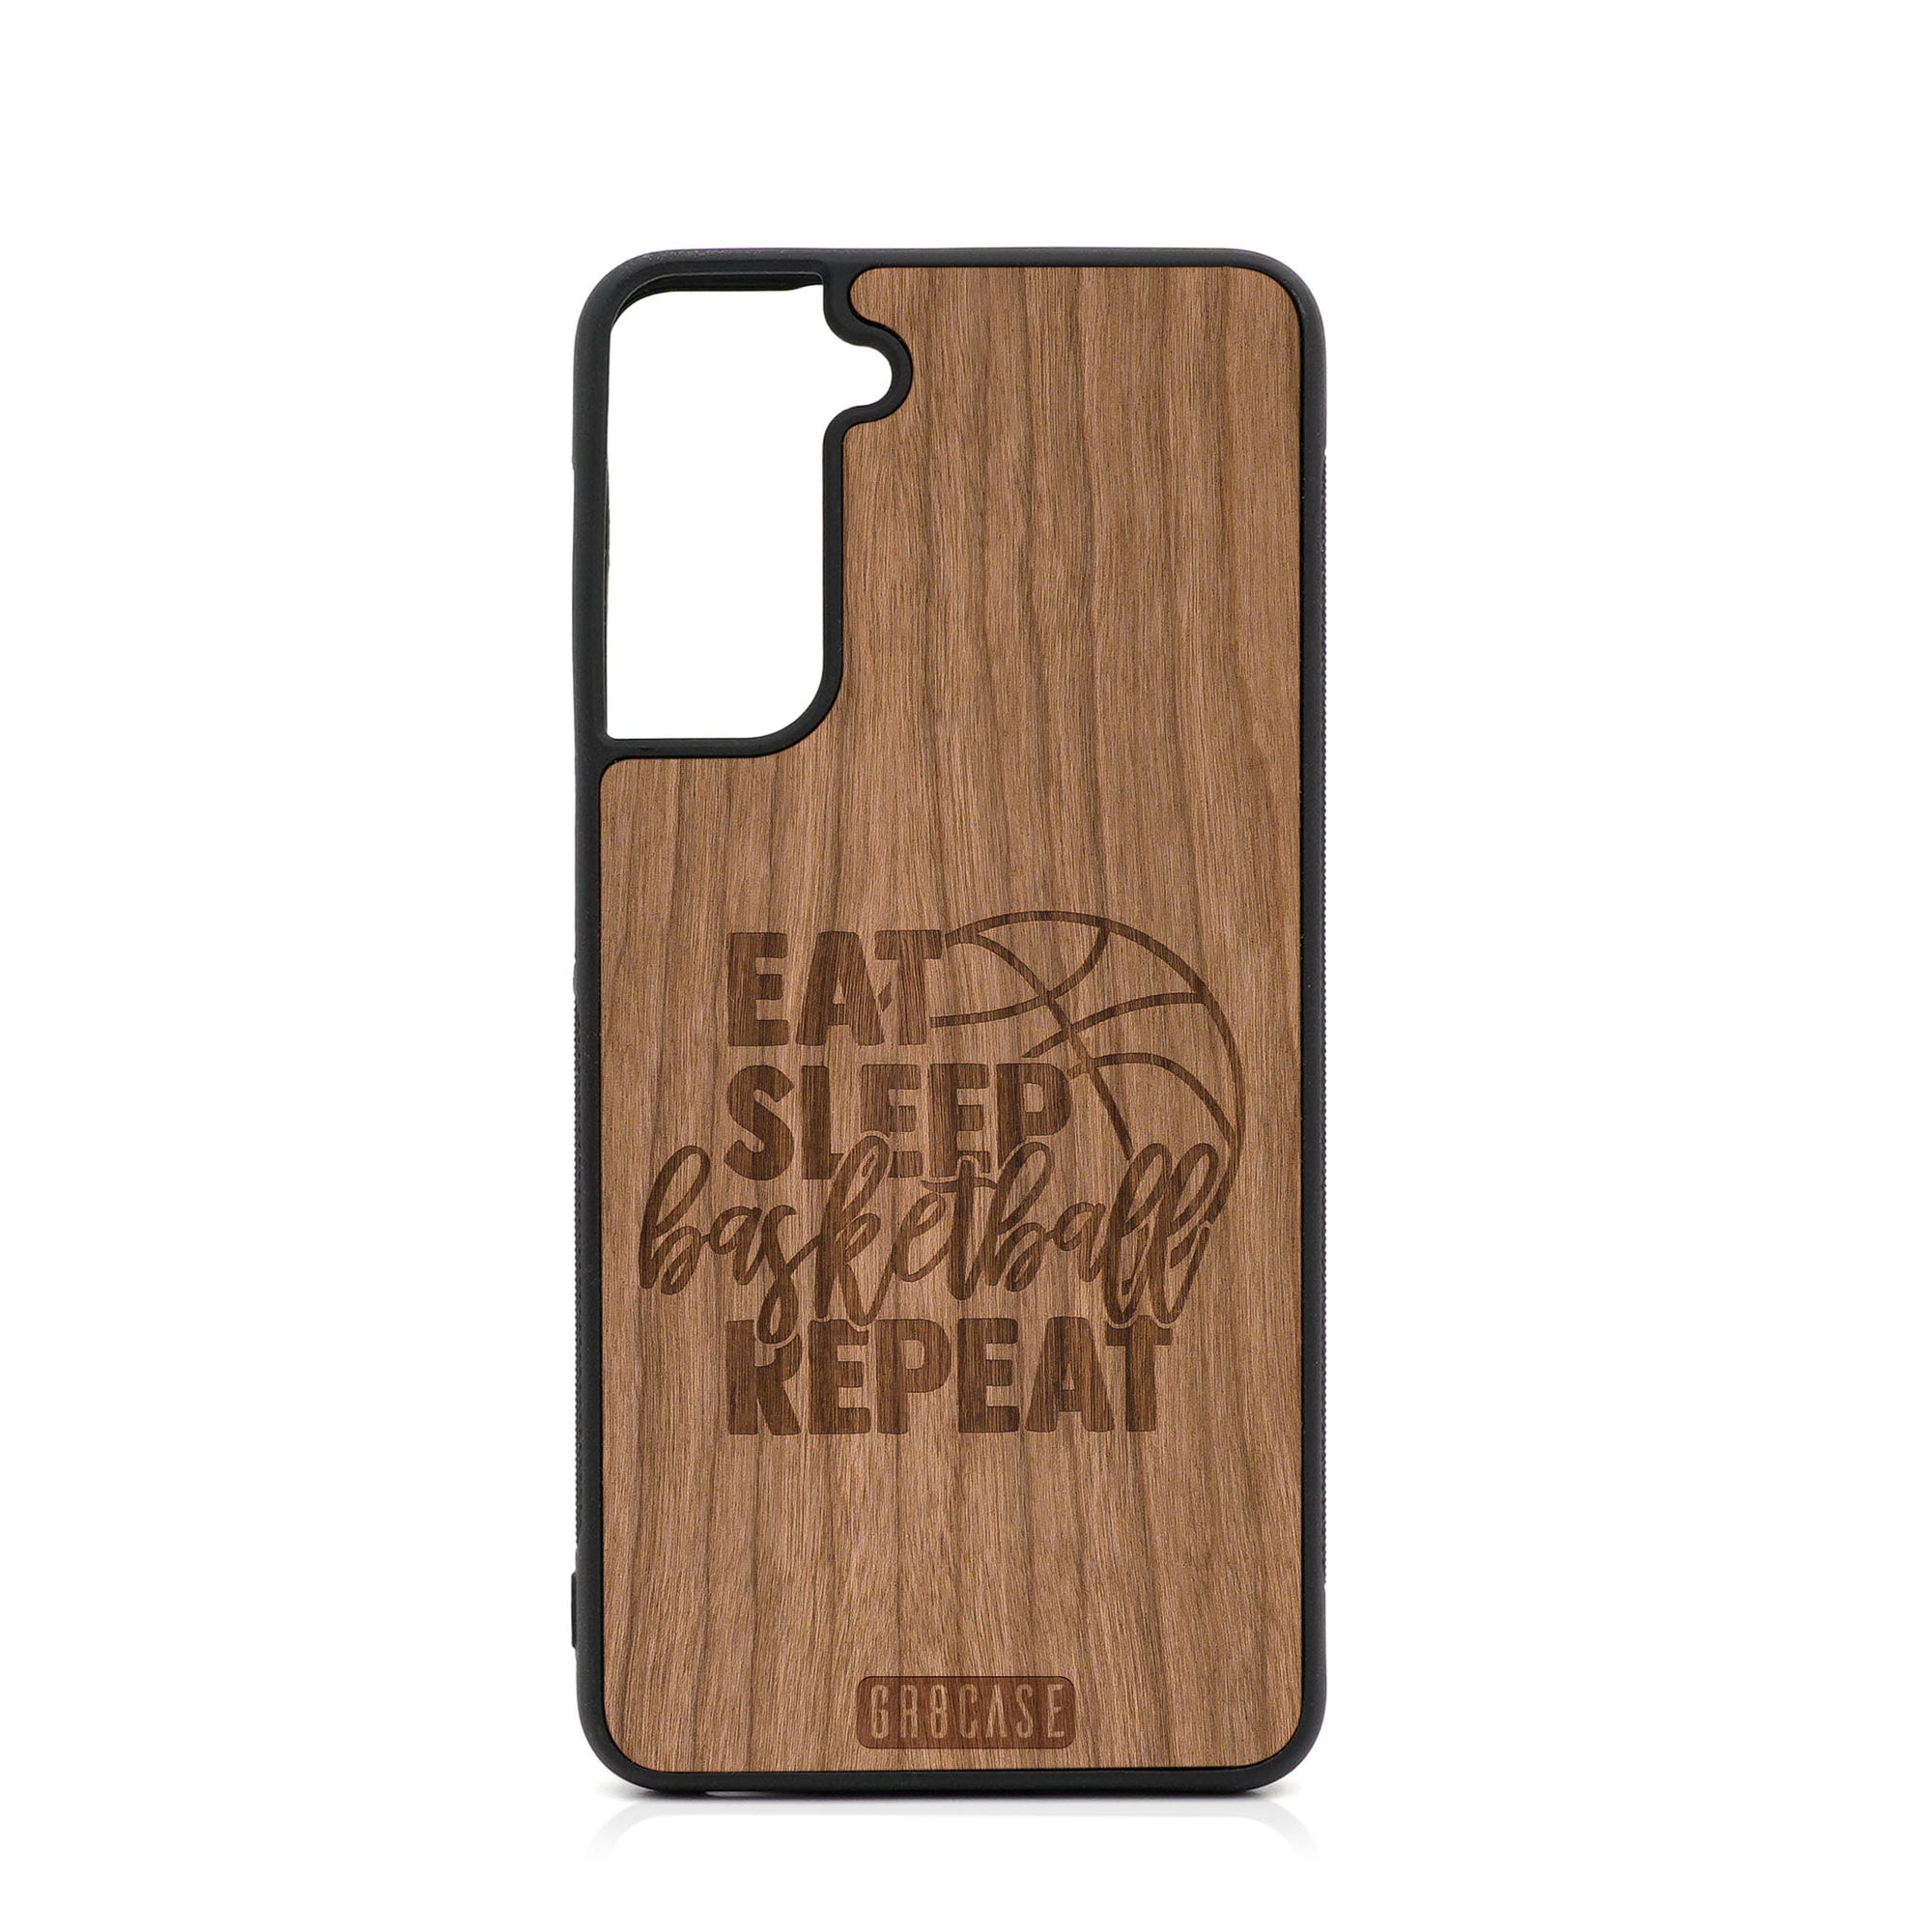 Eat Sleep Basketball Repeat Design Wood Case For Samsung Galaxy S21 Plus 5G